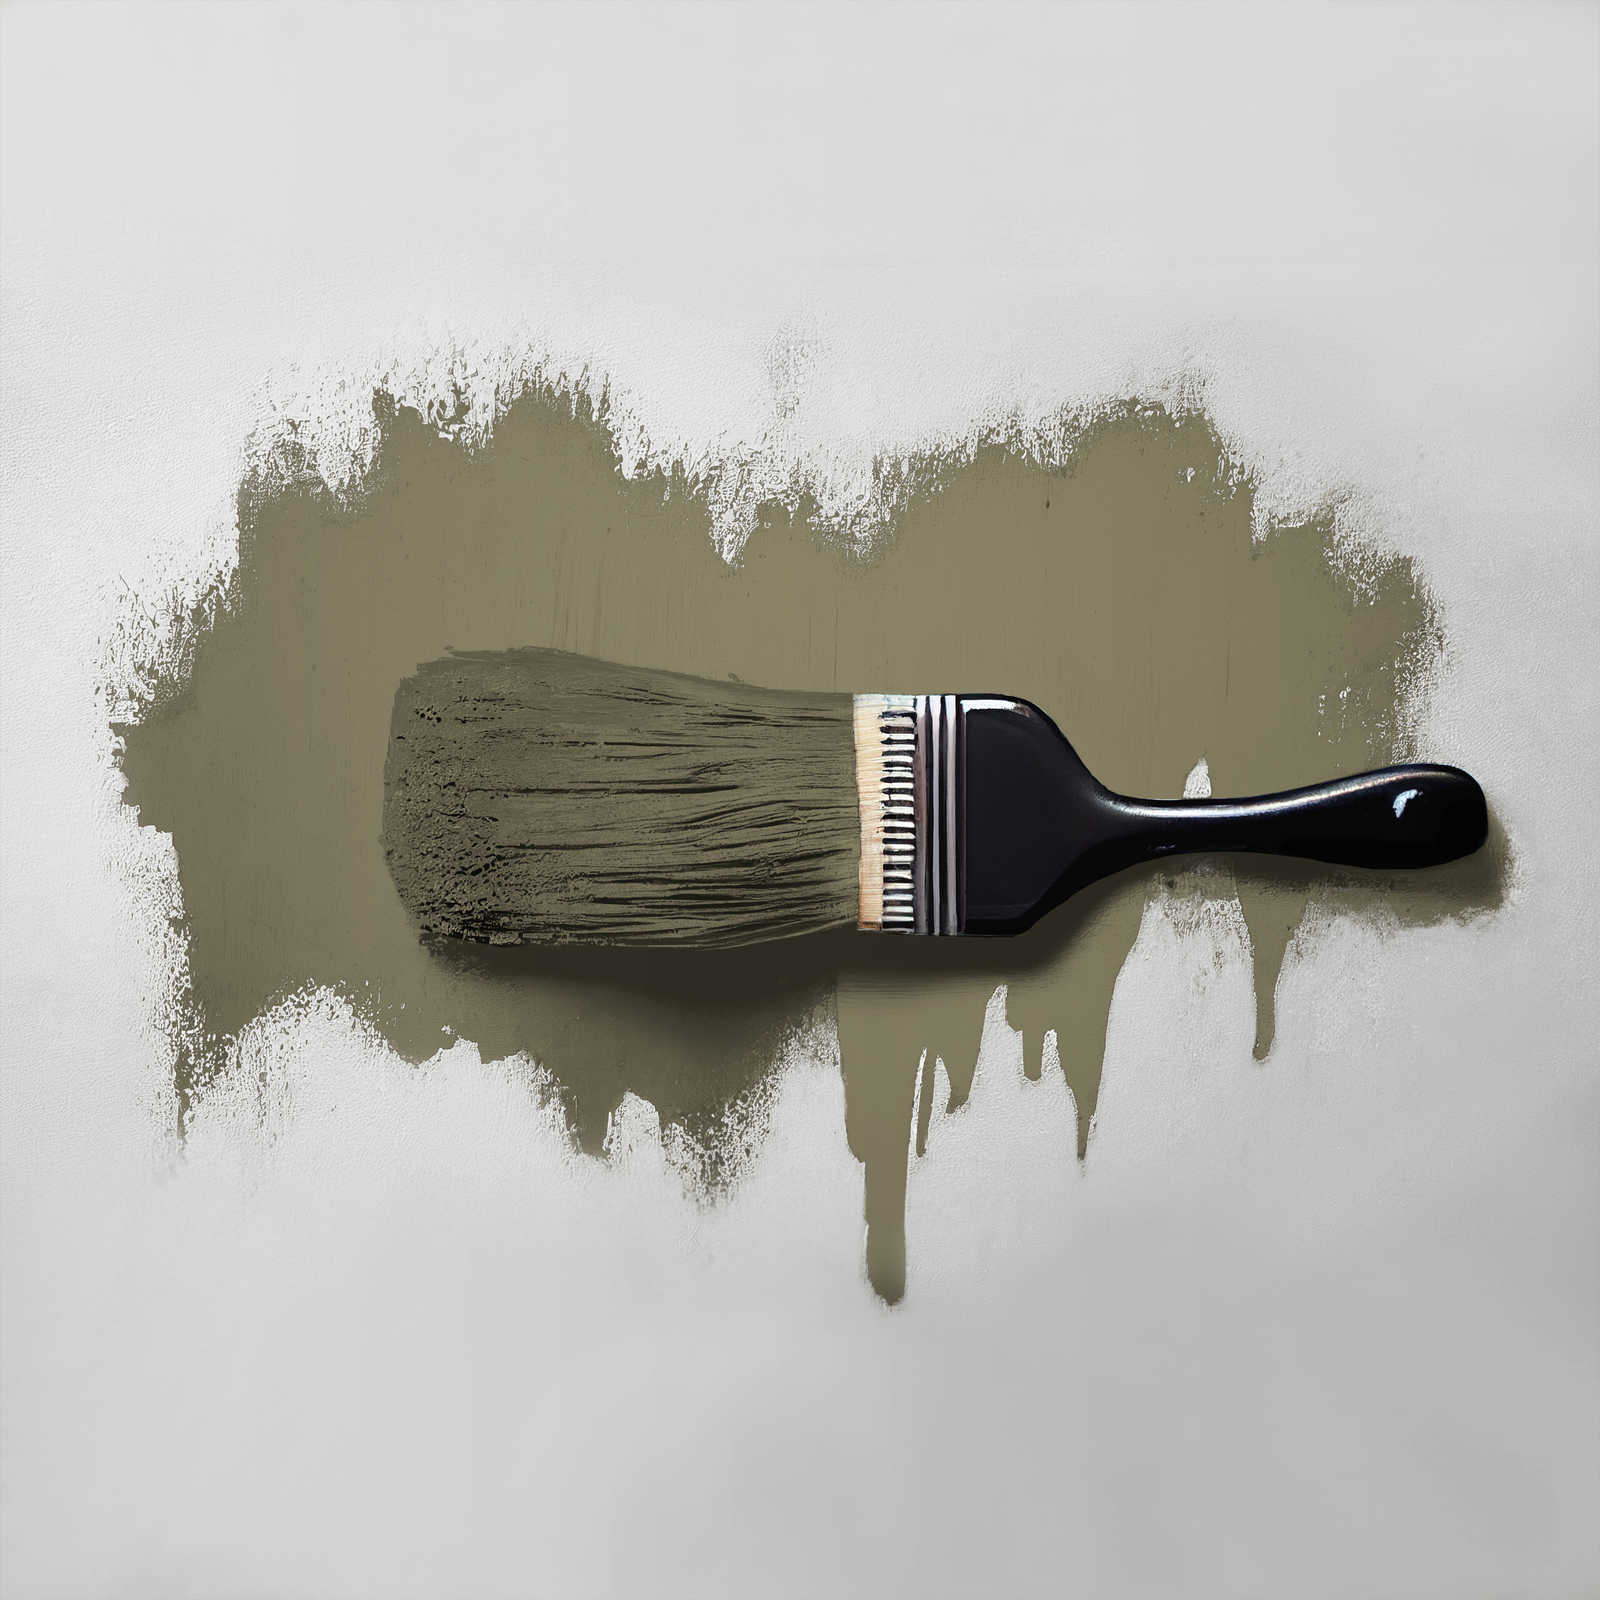             Pittura murale TCK4013 »Ordinary Olive« in tonalità oliva intensiva – 5,0 litri
        